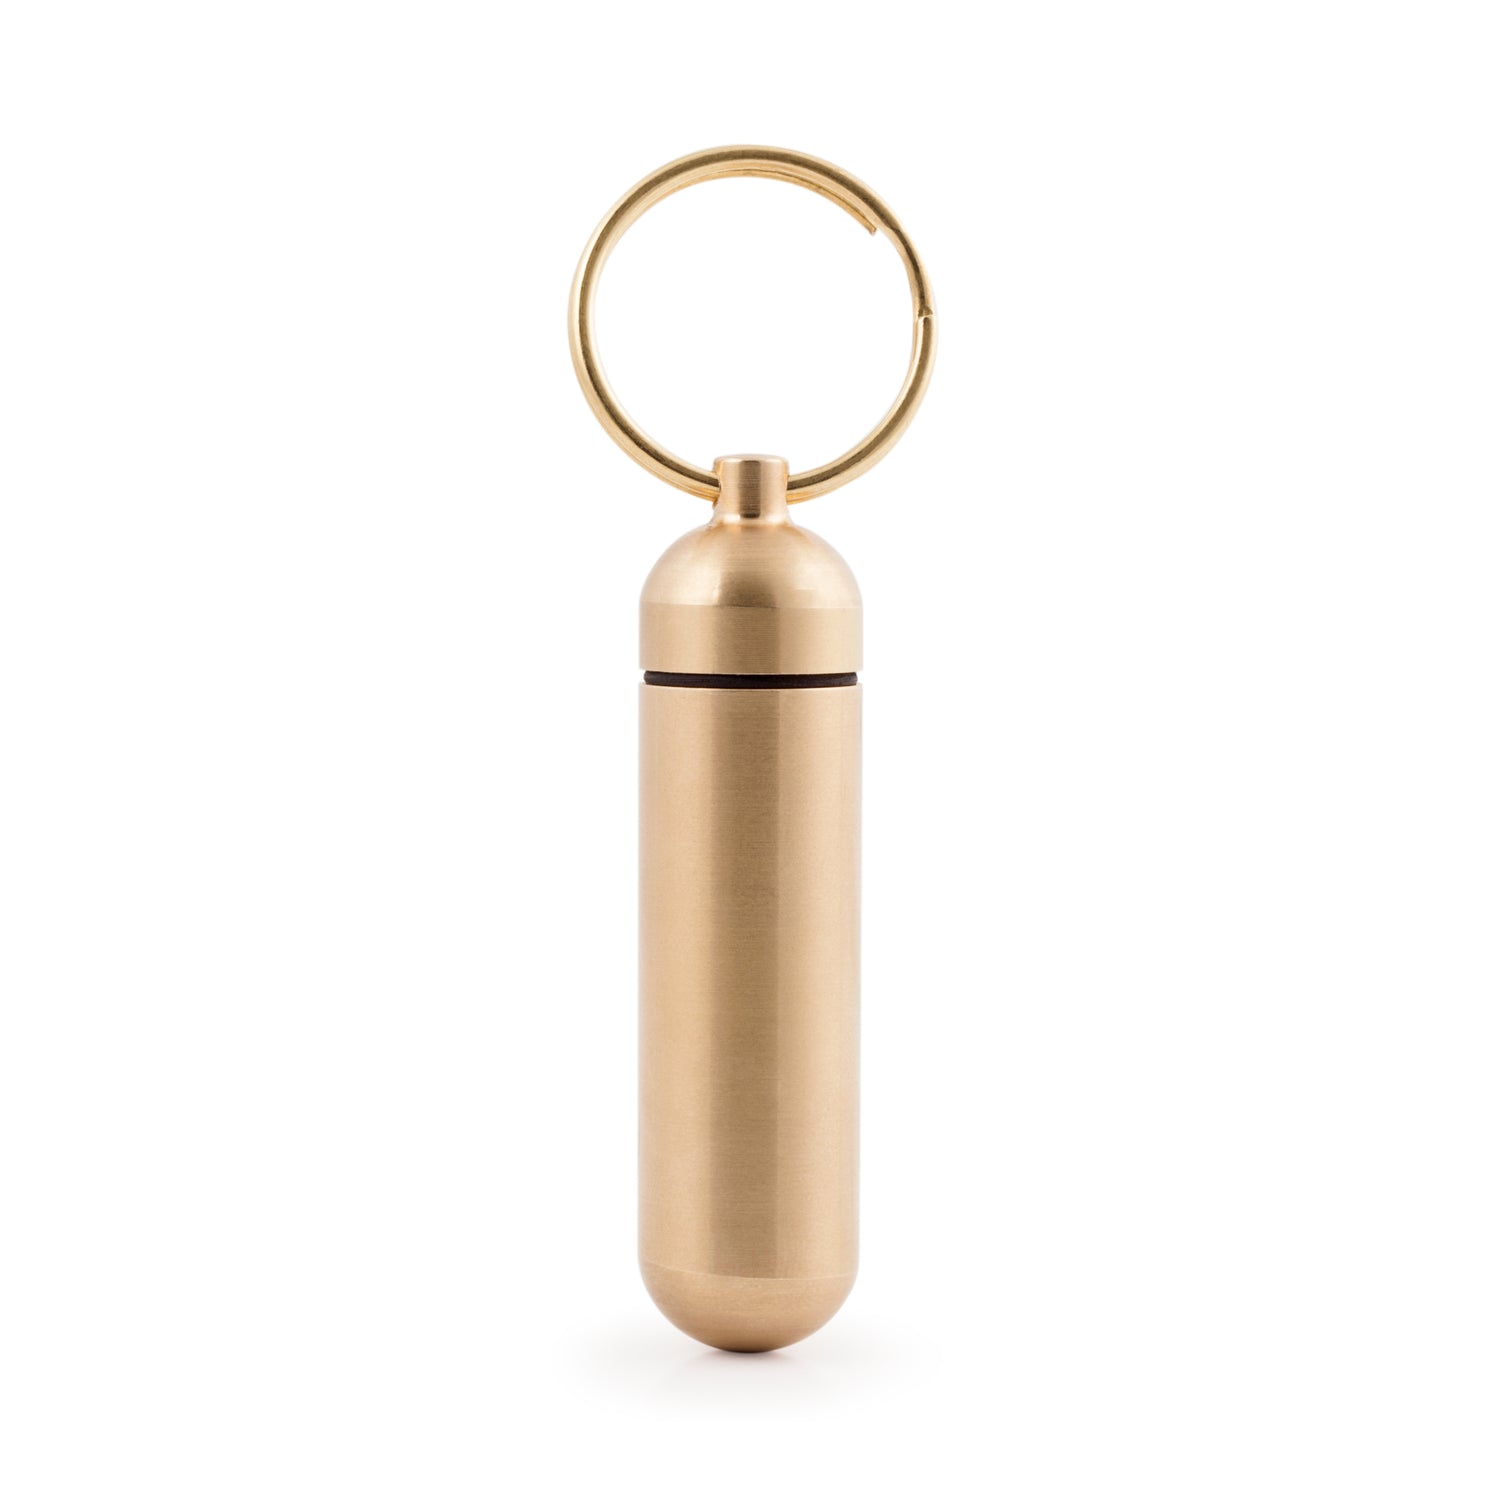 Everyday Carry Brass Keyring – Kikkerland Design Inc